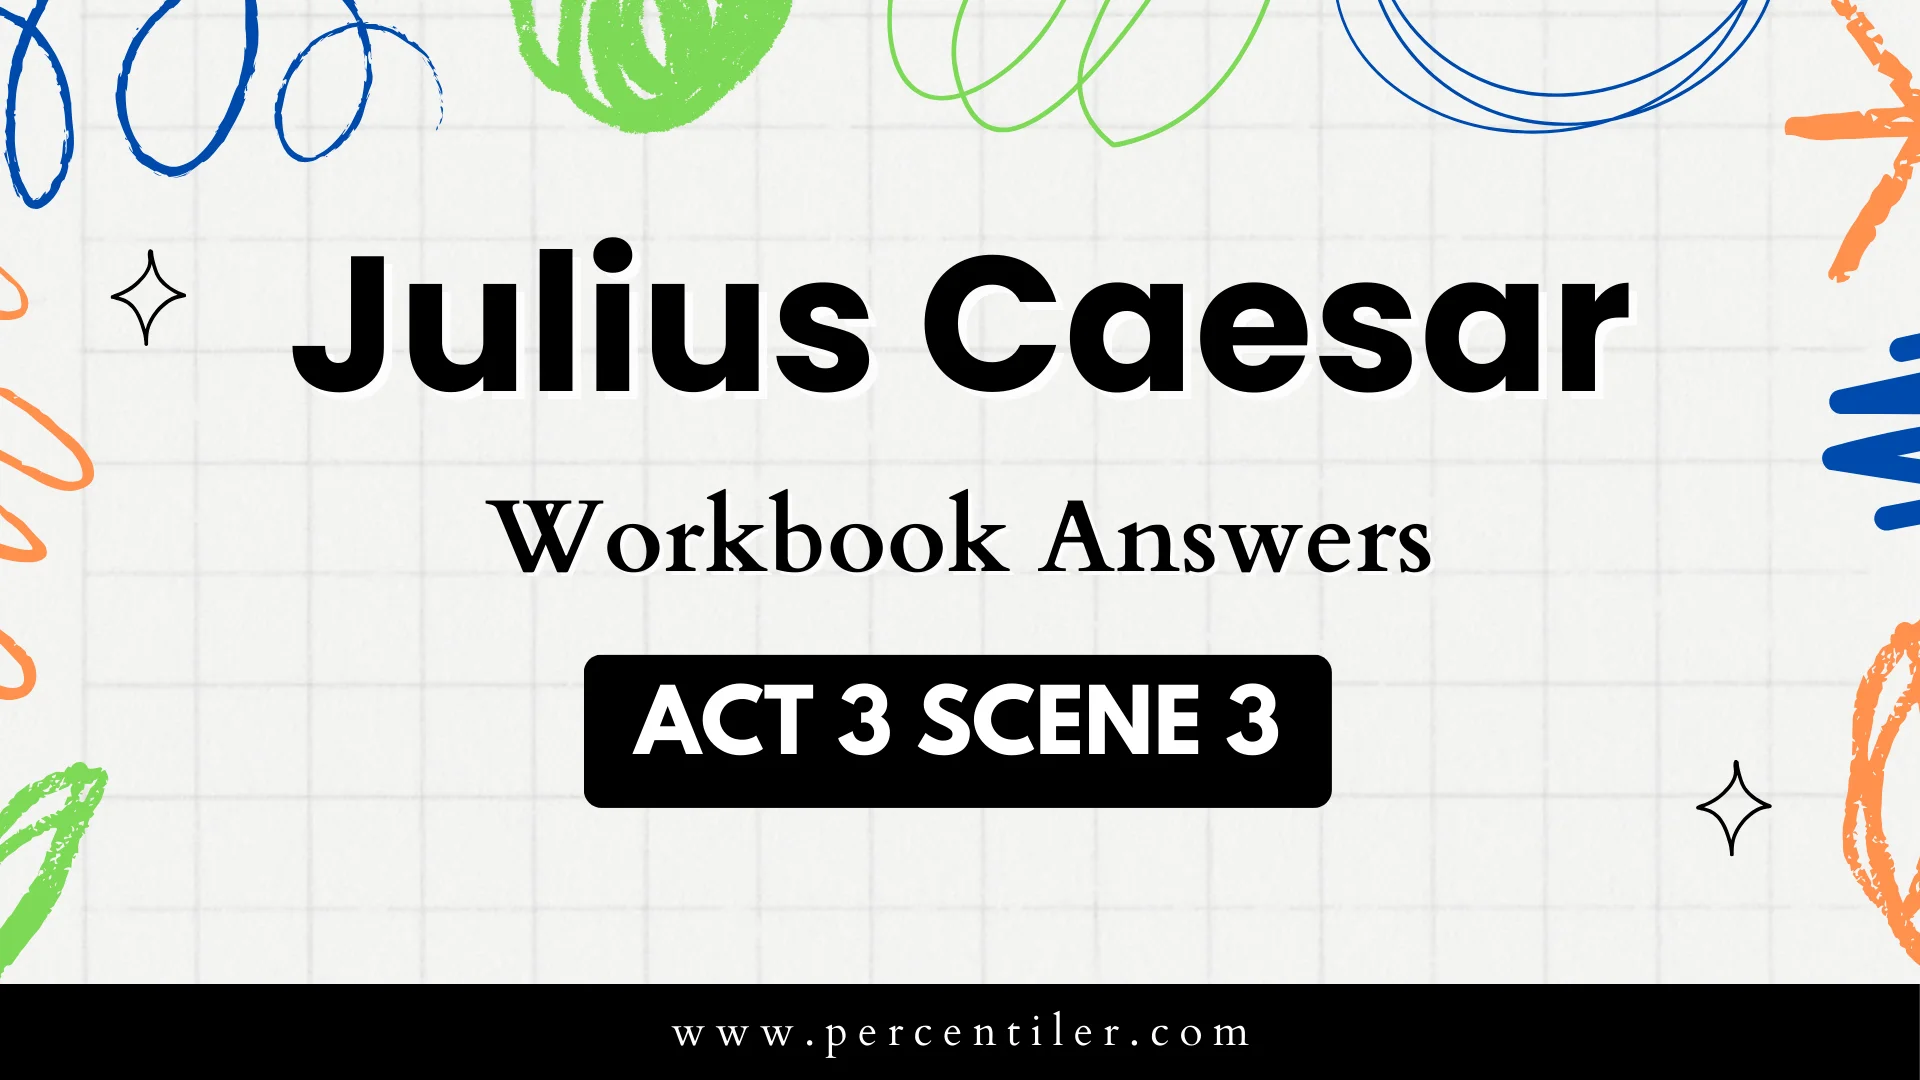 ICSE Julius Caesar Workbook Answer : Act 3 Scene 3